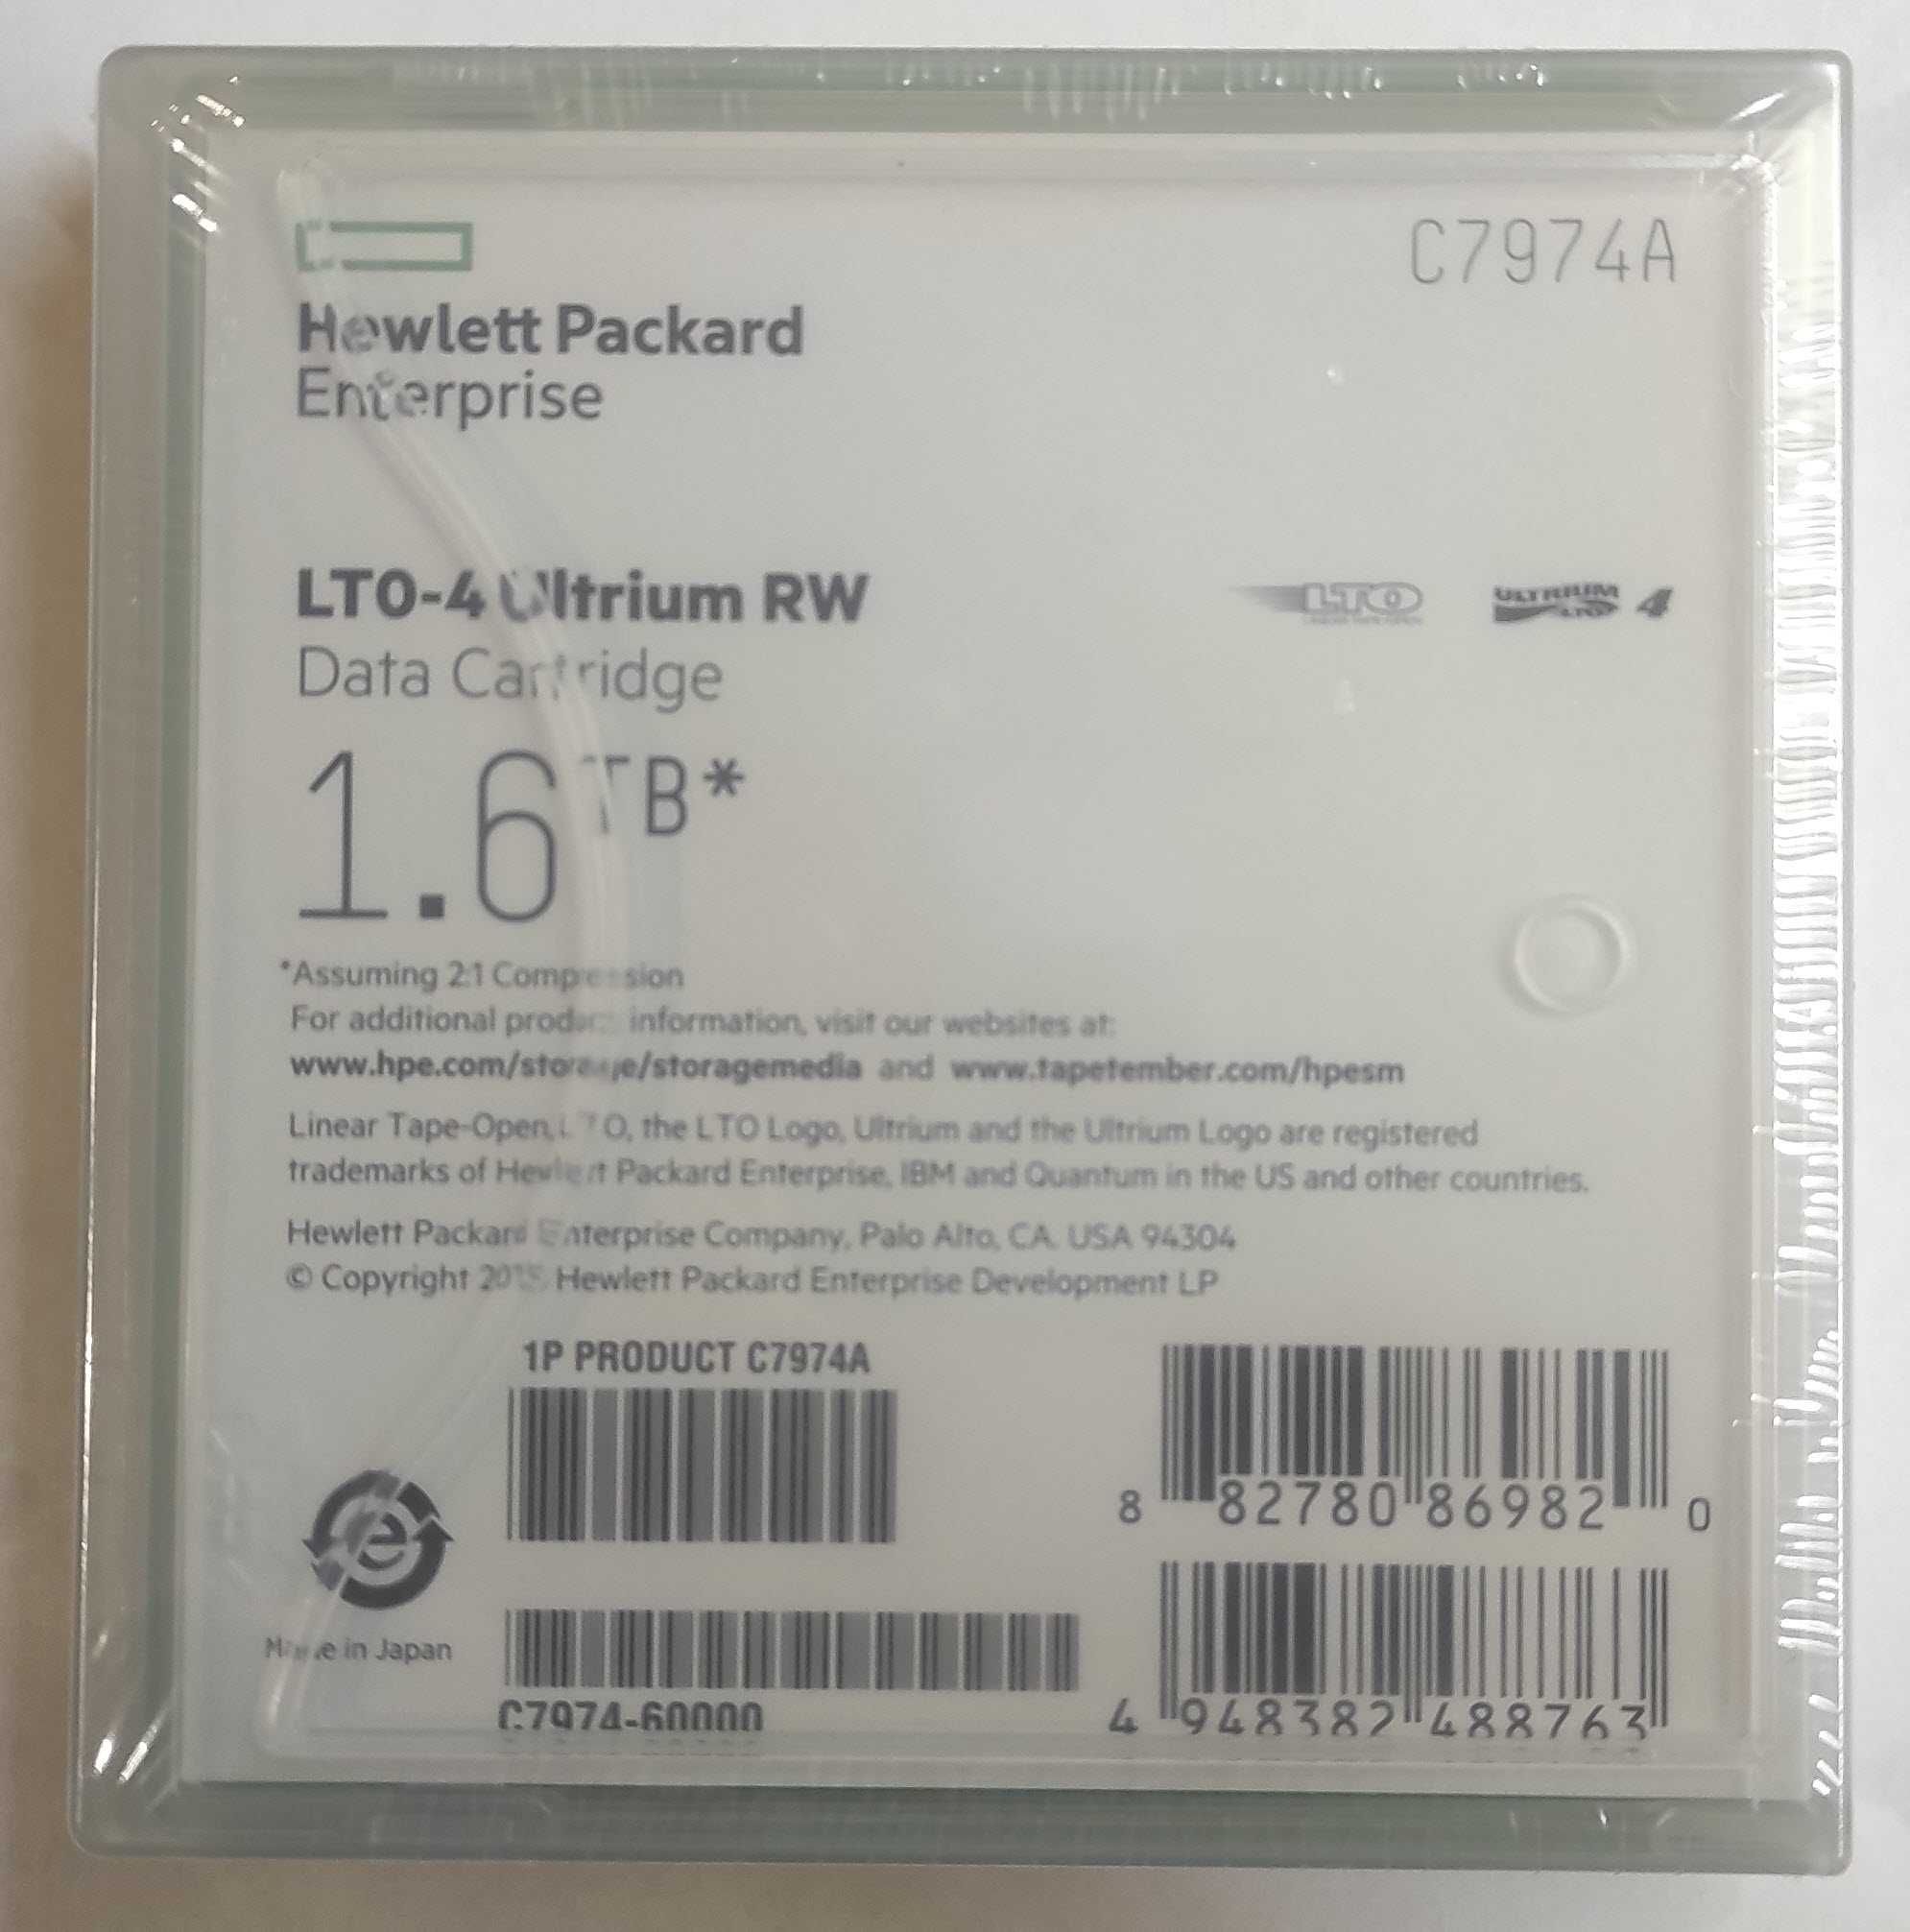 Ленточный картридж C7974A HP LTO-4 Ultrium 1.6TB RW Data Cartridge.